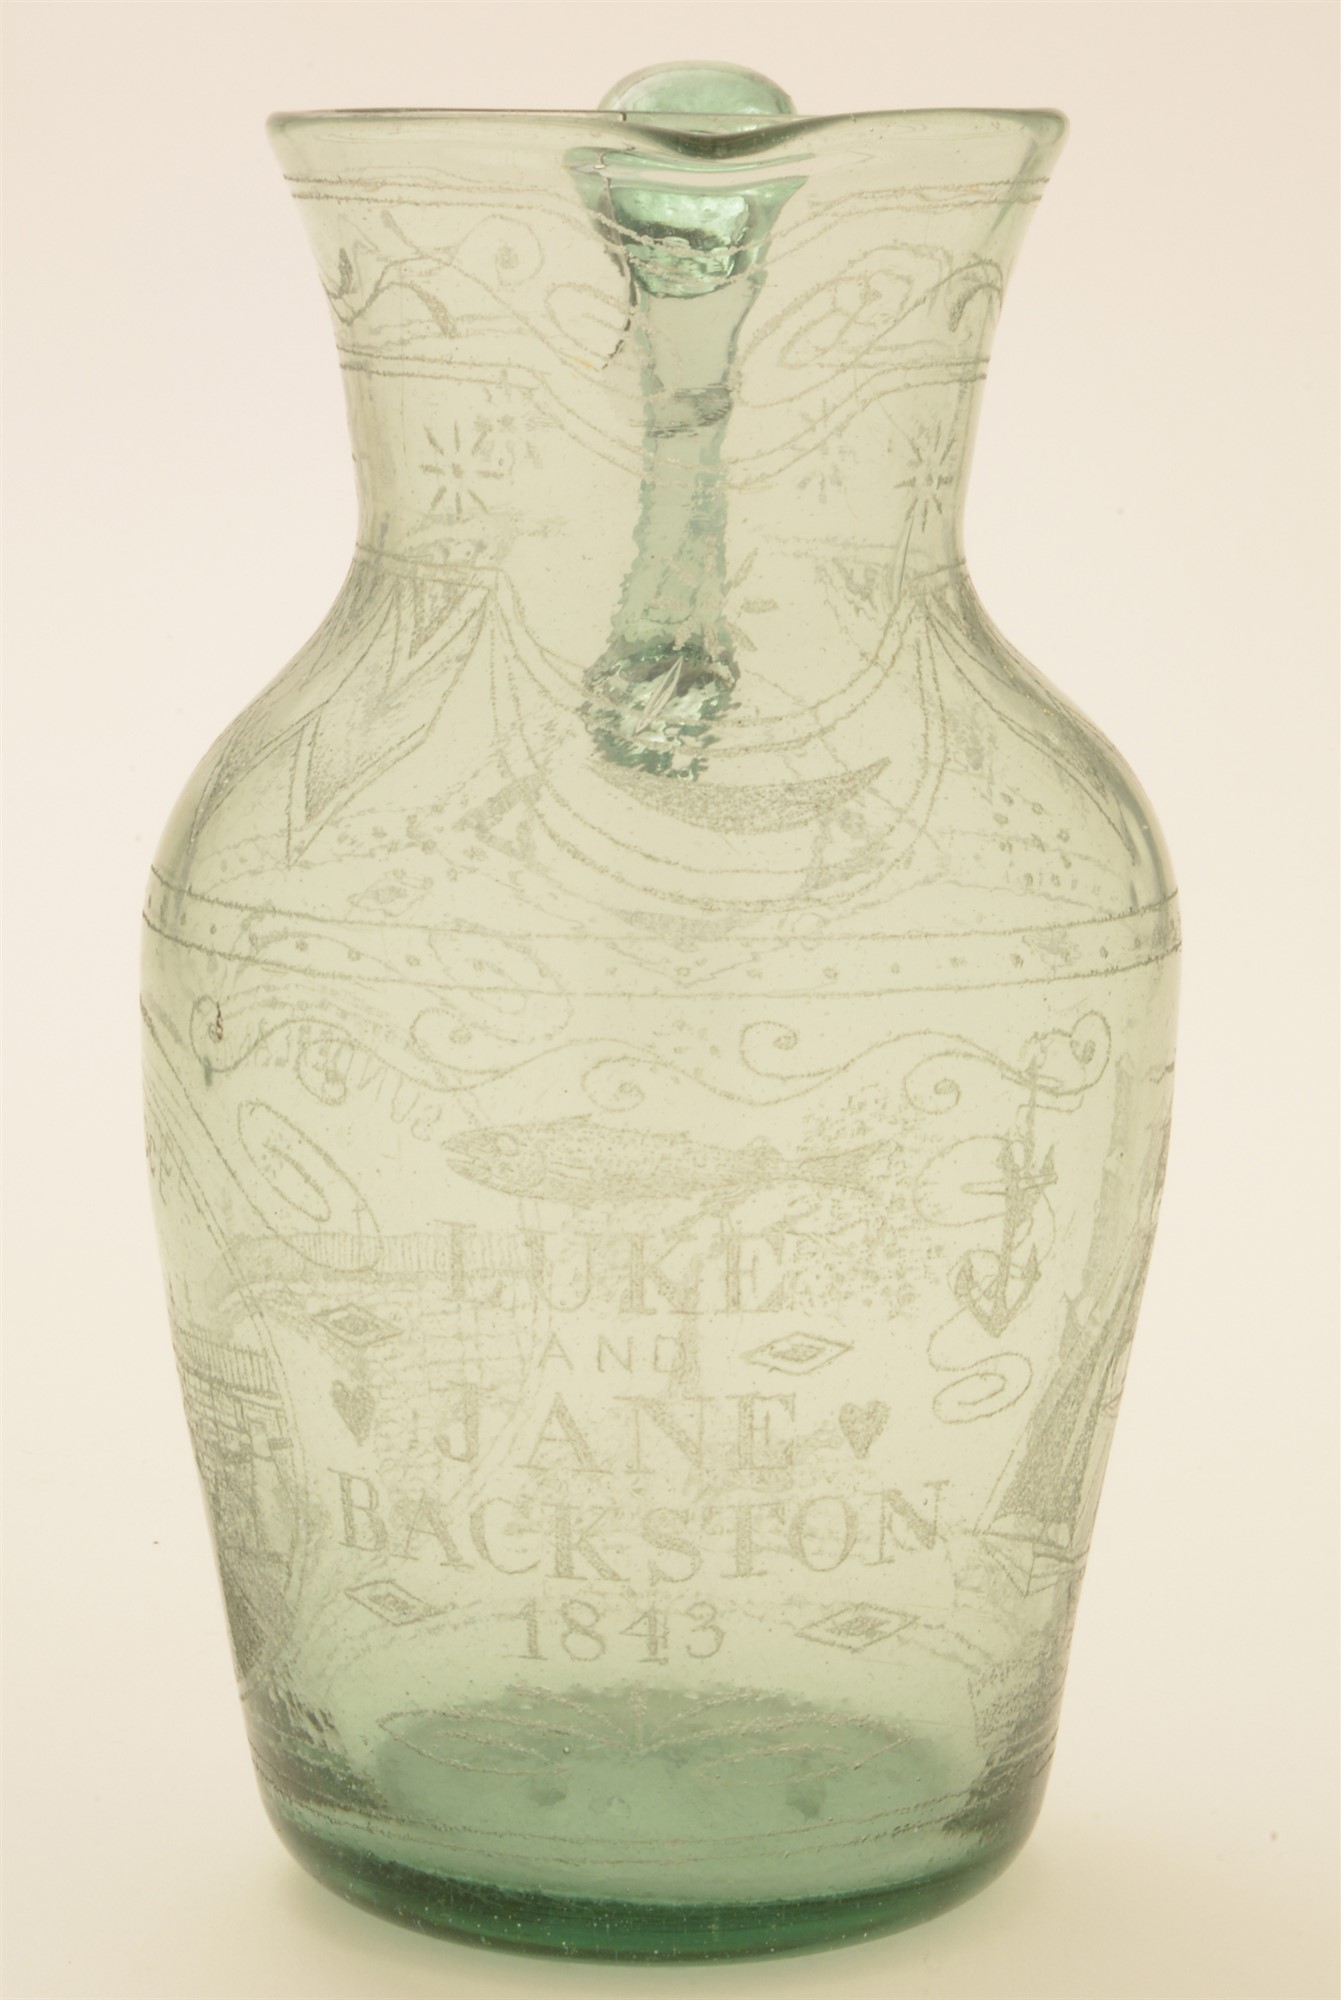 Sunderland glass jug. - Image 3 of 5